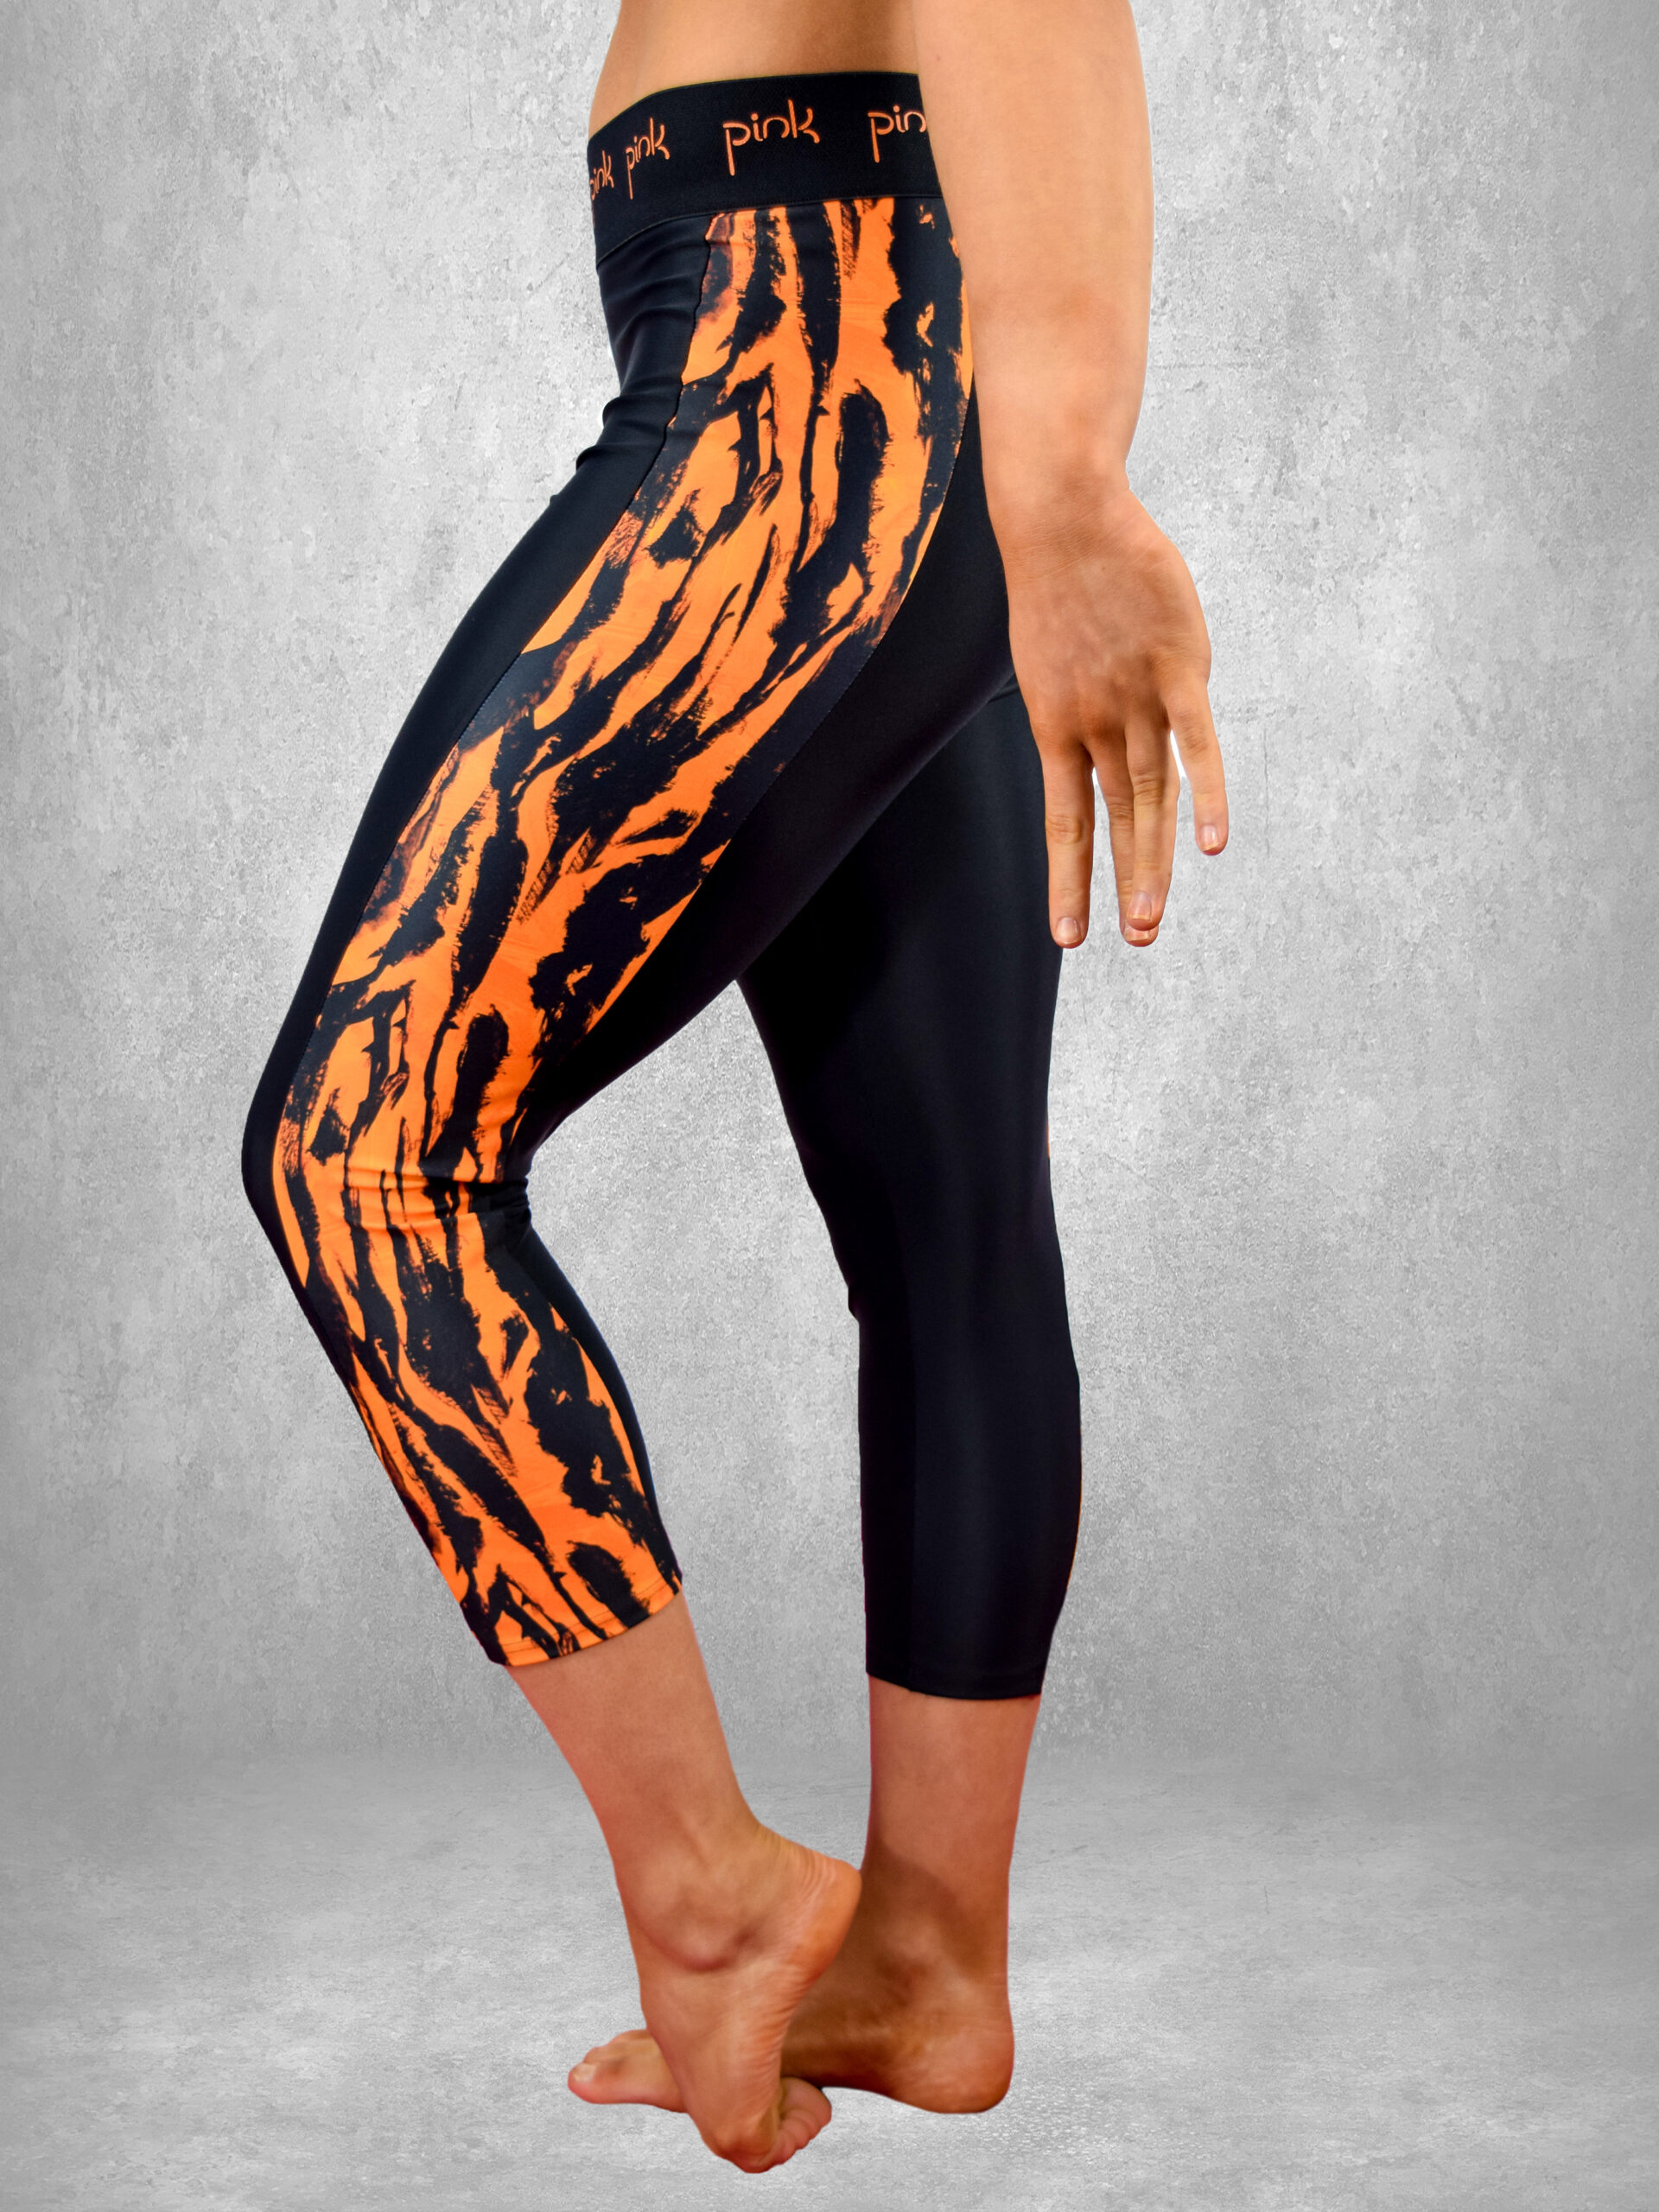 https://pinkleisurewear.co.uk/wp-content/uploads/2022/03/Tiger-Leggings-Side-scaled.jpg